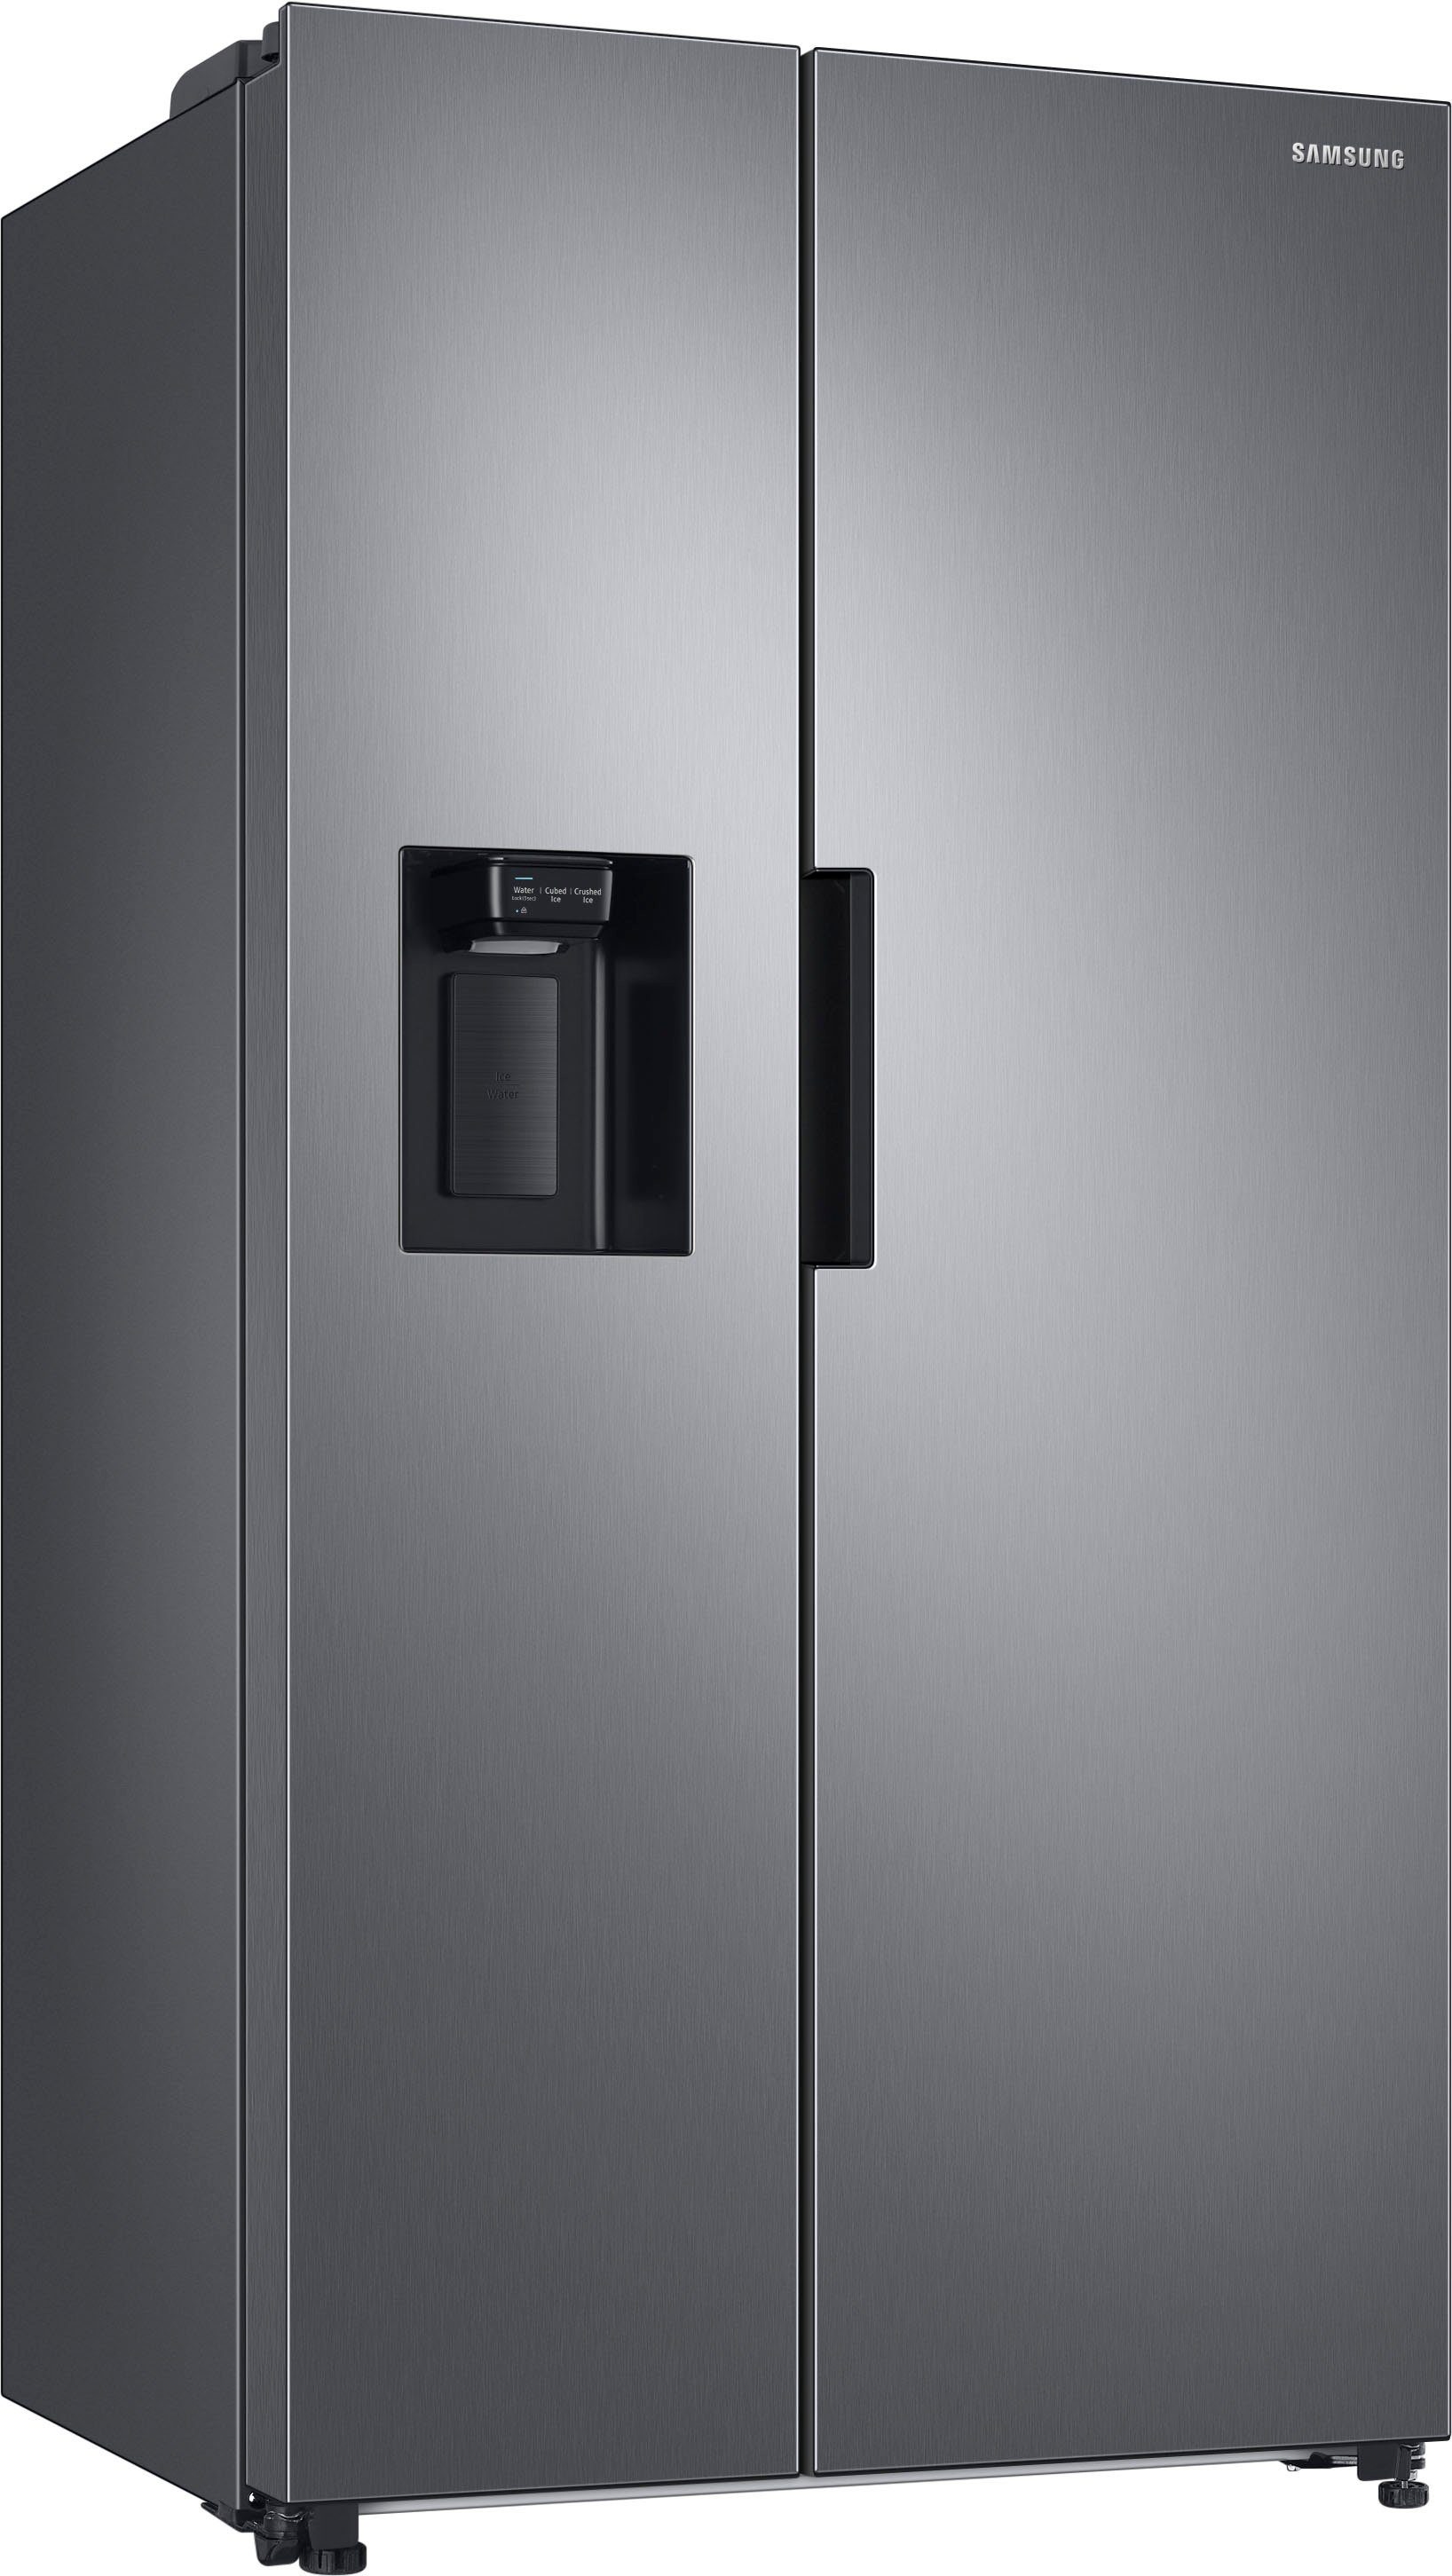 Samsung Side-by-Side RS8000 RS6JA8511S9, 178,0 cm hoch, 91,2 cm breit, mit Wassertank | Side-by-Side Kühlschränke